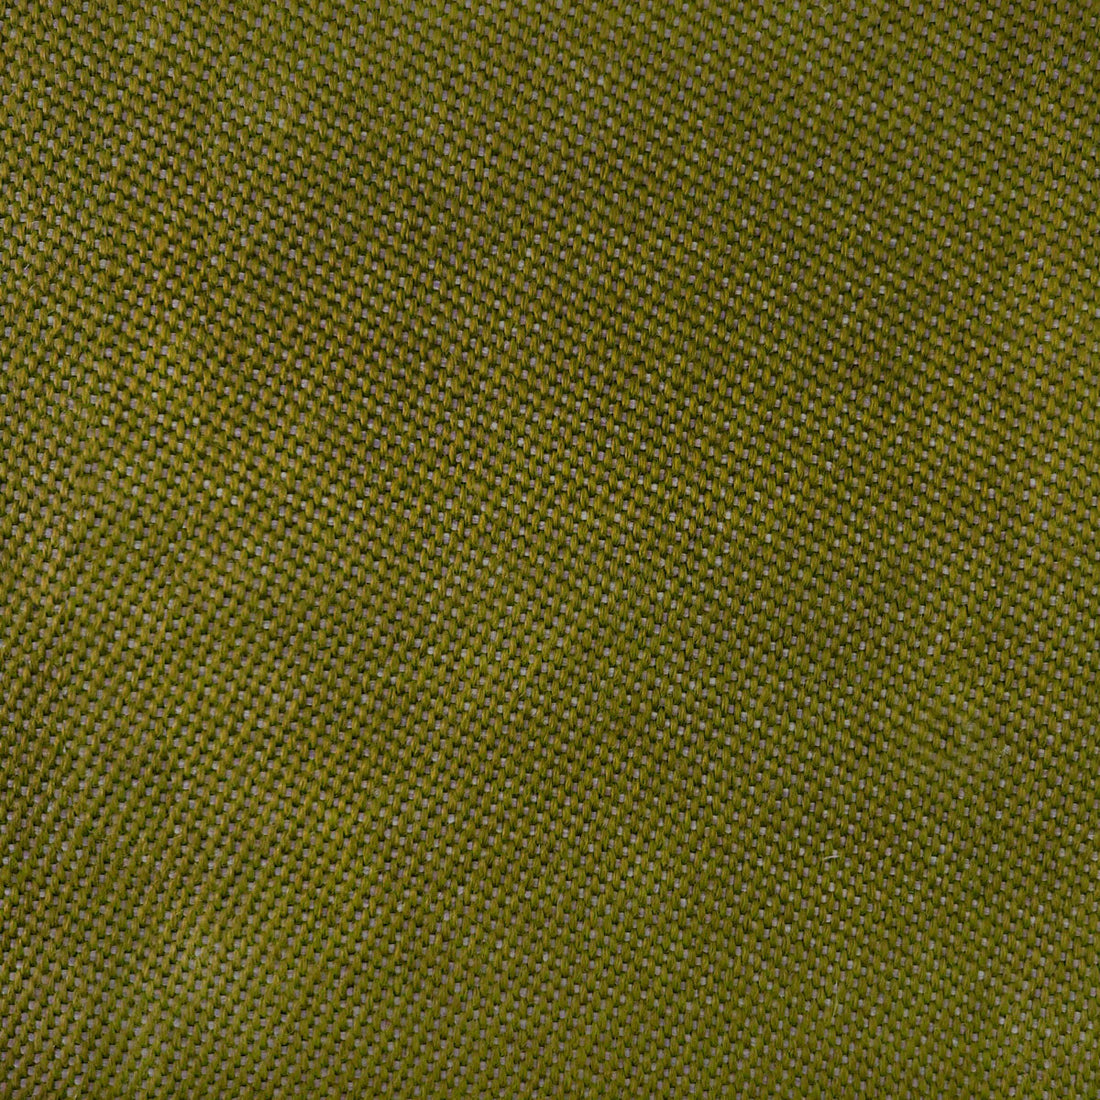 Max fabric in verde color - pattern LCT1067.006.0 - by Gaston y Daniela in the Lorenzo Castillo VI collection